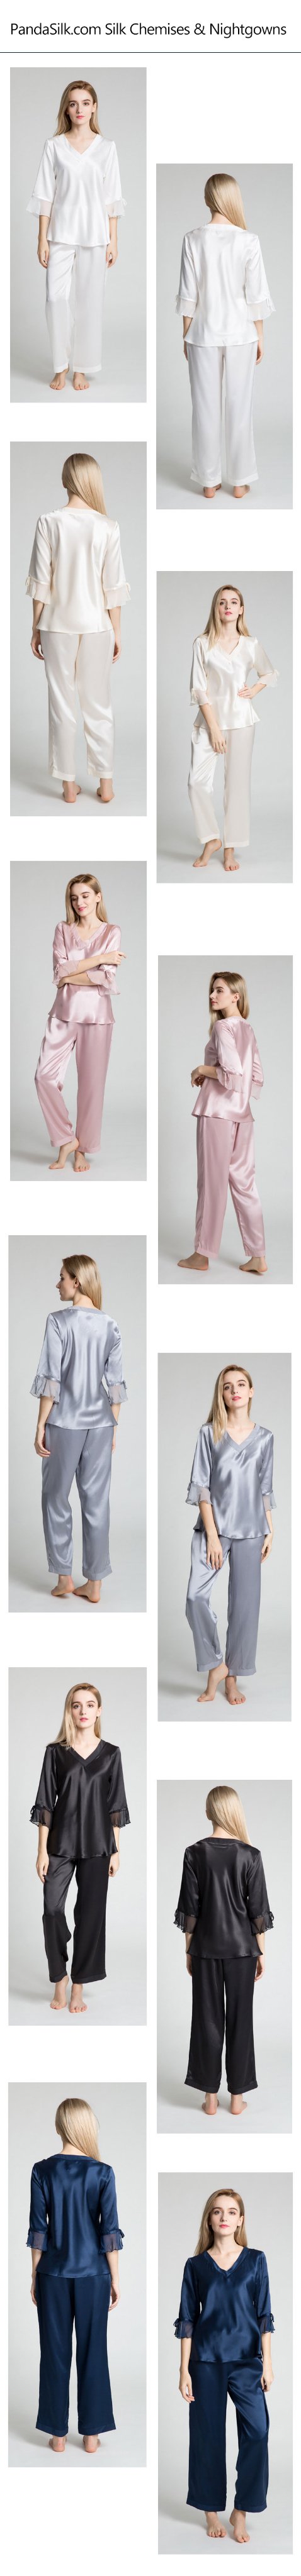 Women's Silk Camisole Tank Top & Shorts Pajama Set